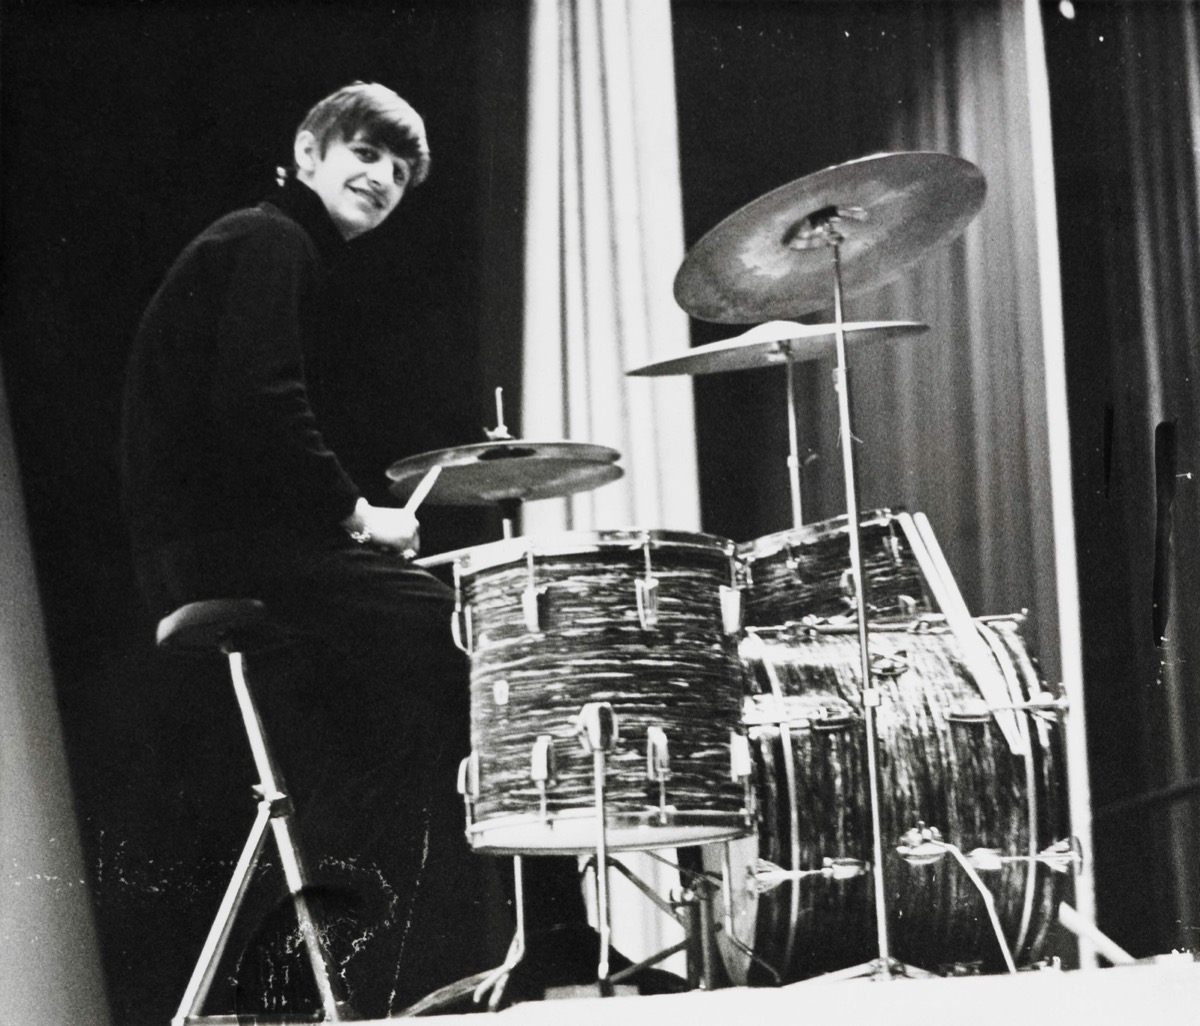 Ringo Starr behind his drum kit in 1963